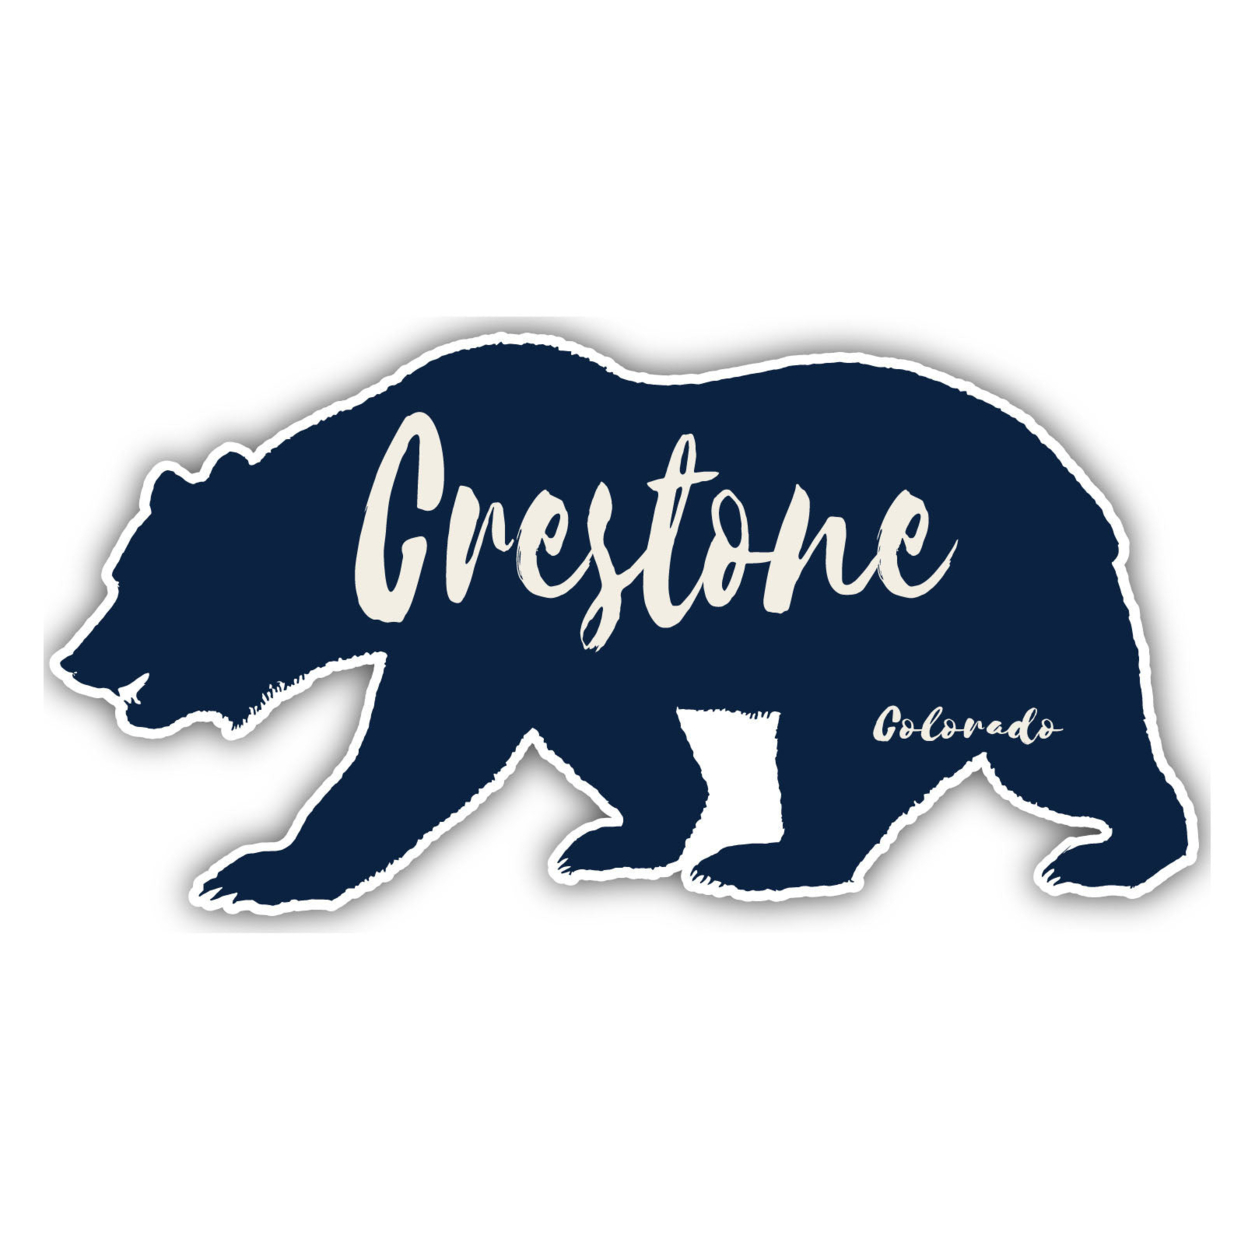 Crestone Colorado Souvenir Decorative Stickers (Choose Theme And Size) - 4-Pack, 8-Inch, Tent